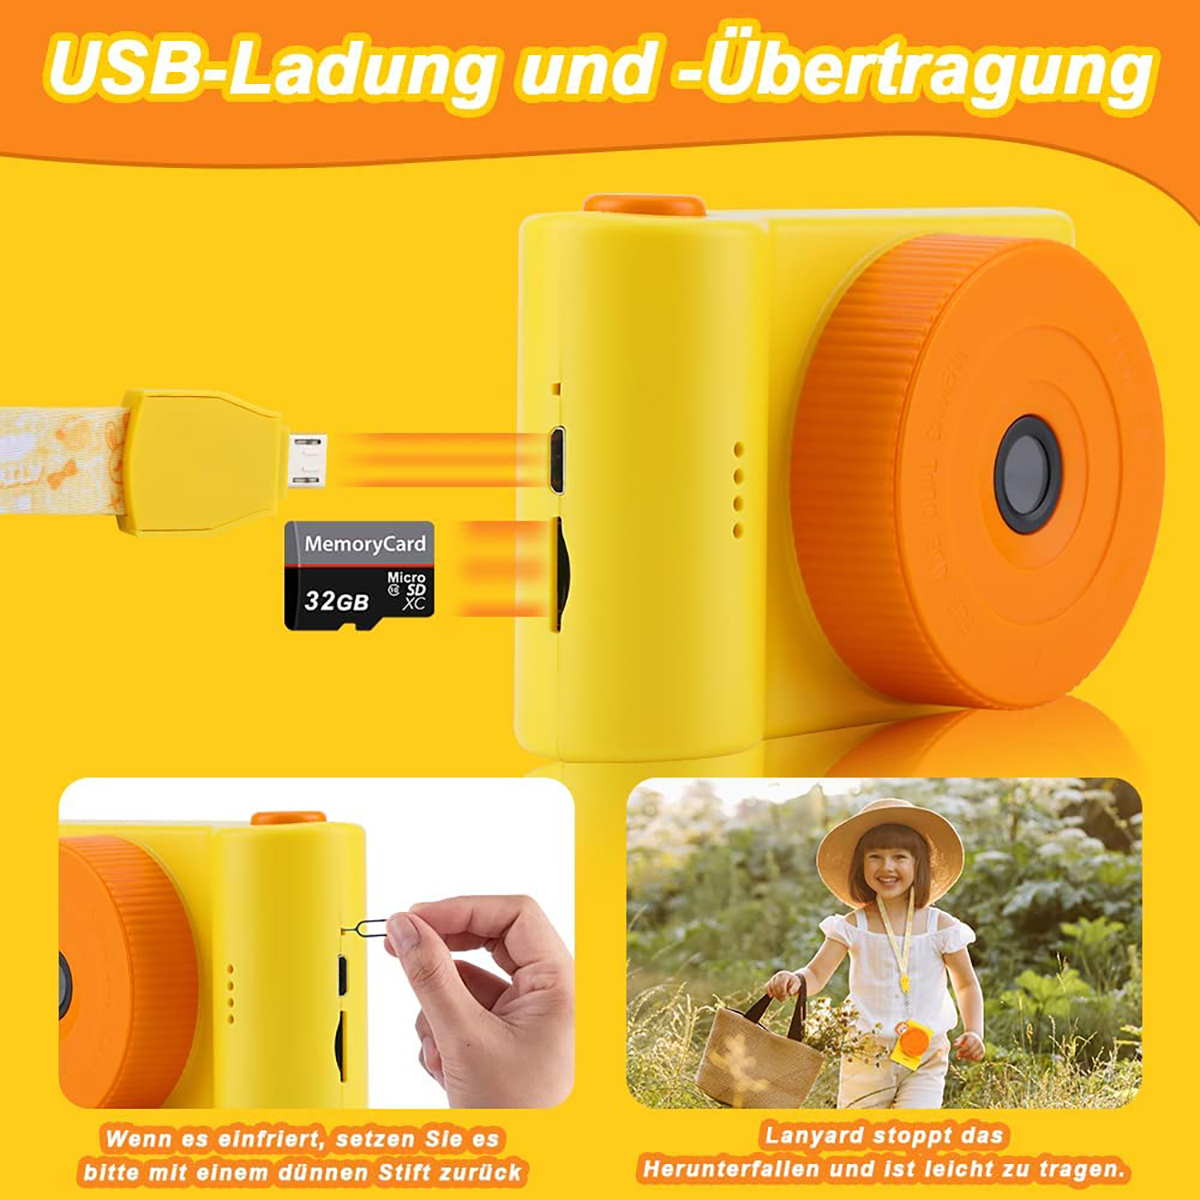 Kinderkamera 32 WiFi-Digitalkamera, Weihnachtsgeschenk 1080P, 48 MP, Kinderkamera, SD-Karte, GB Gelb LINGDA